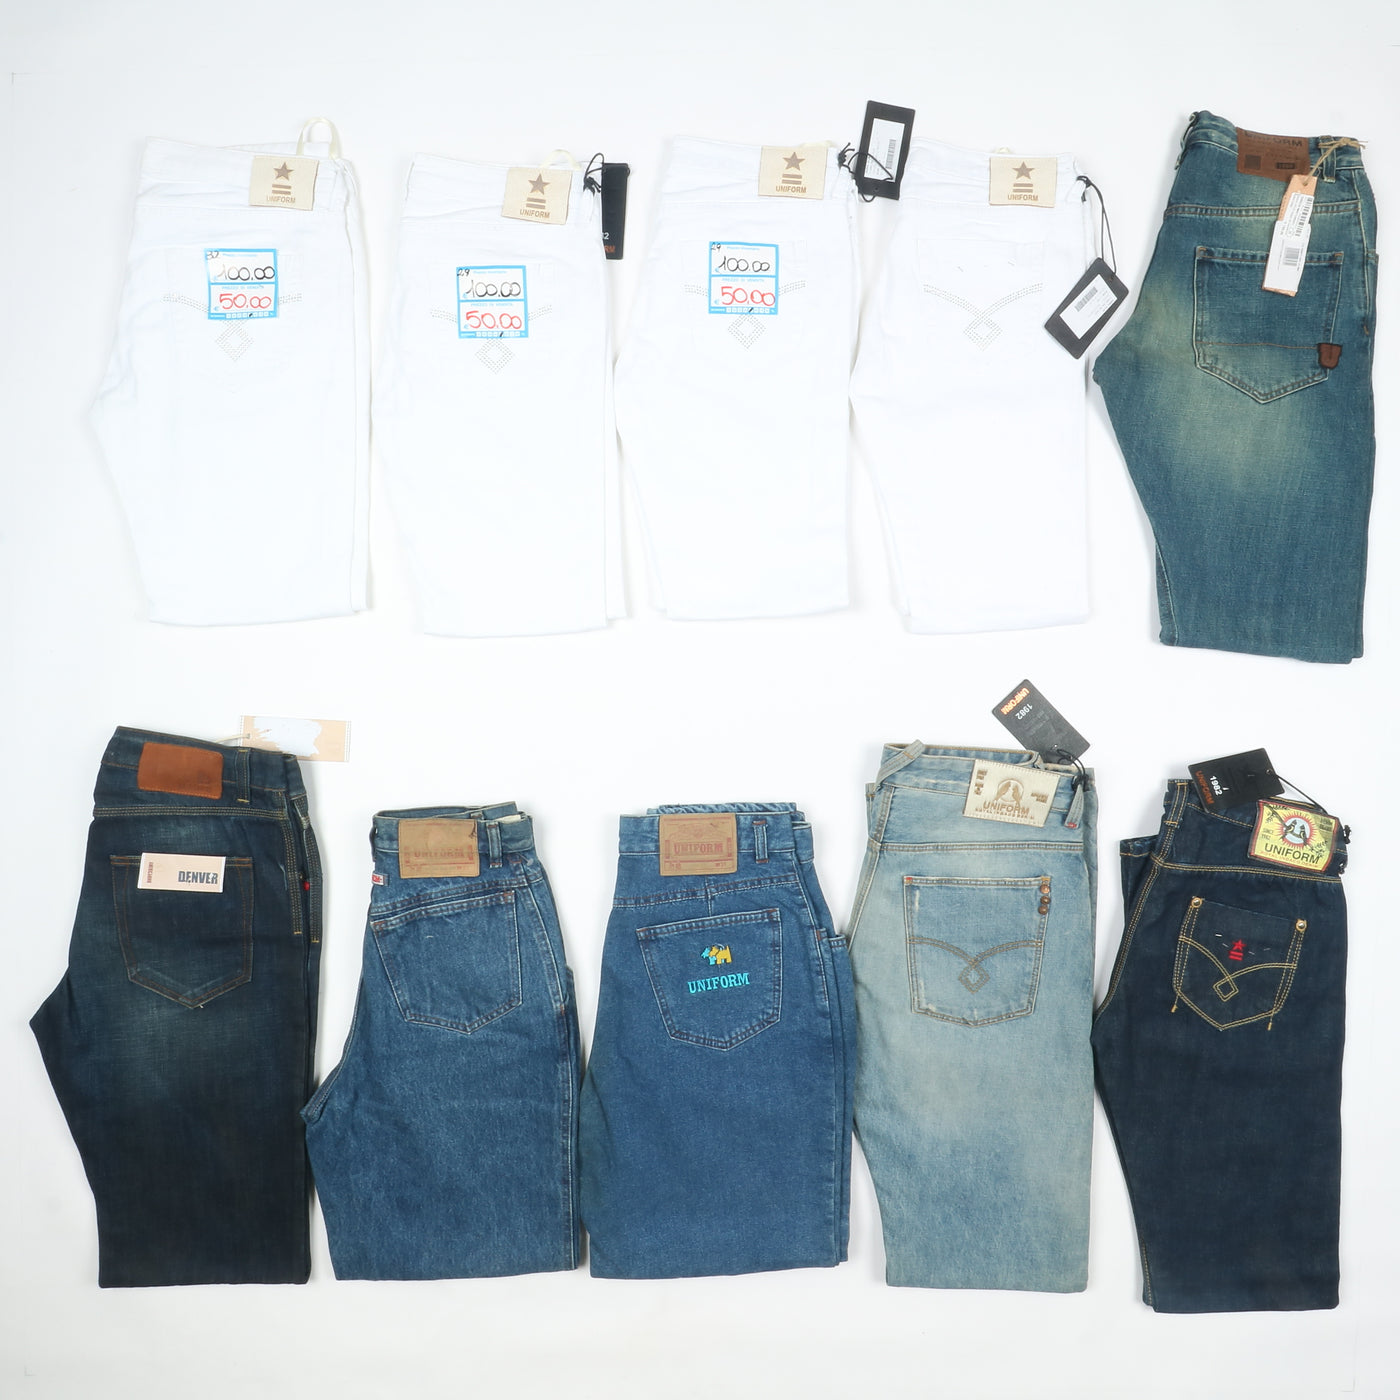 Pantaloni e jeans uomo stock da 46pz Uniform, Cotton belt, Romeo Gigli...